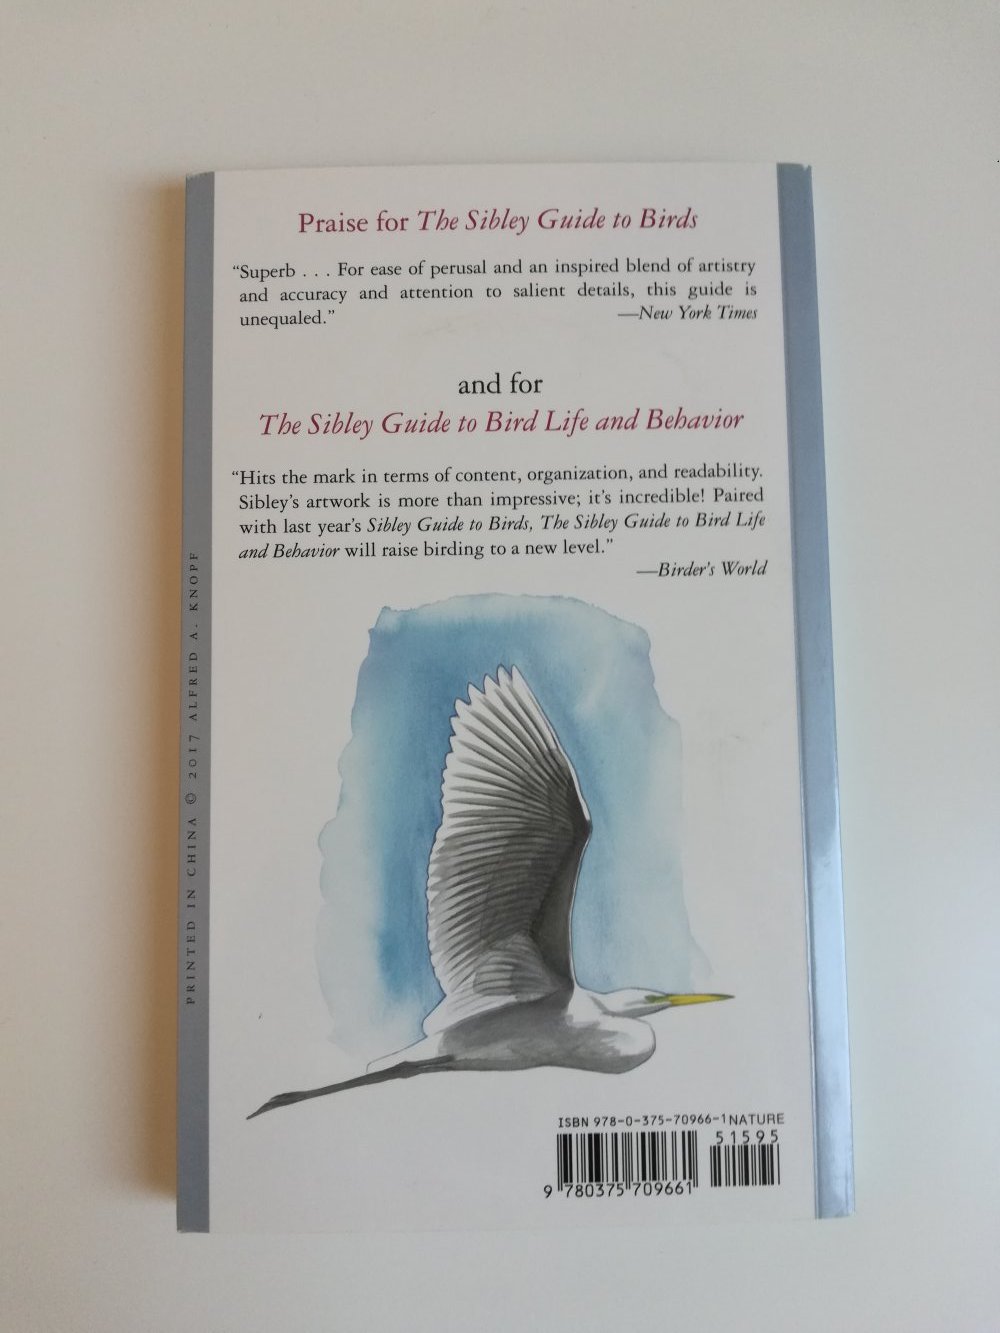 Sibley's Birding Basics / Sachbuch Ornithologie